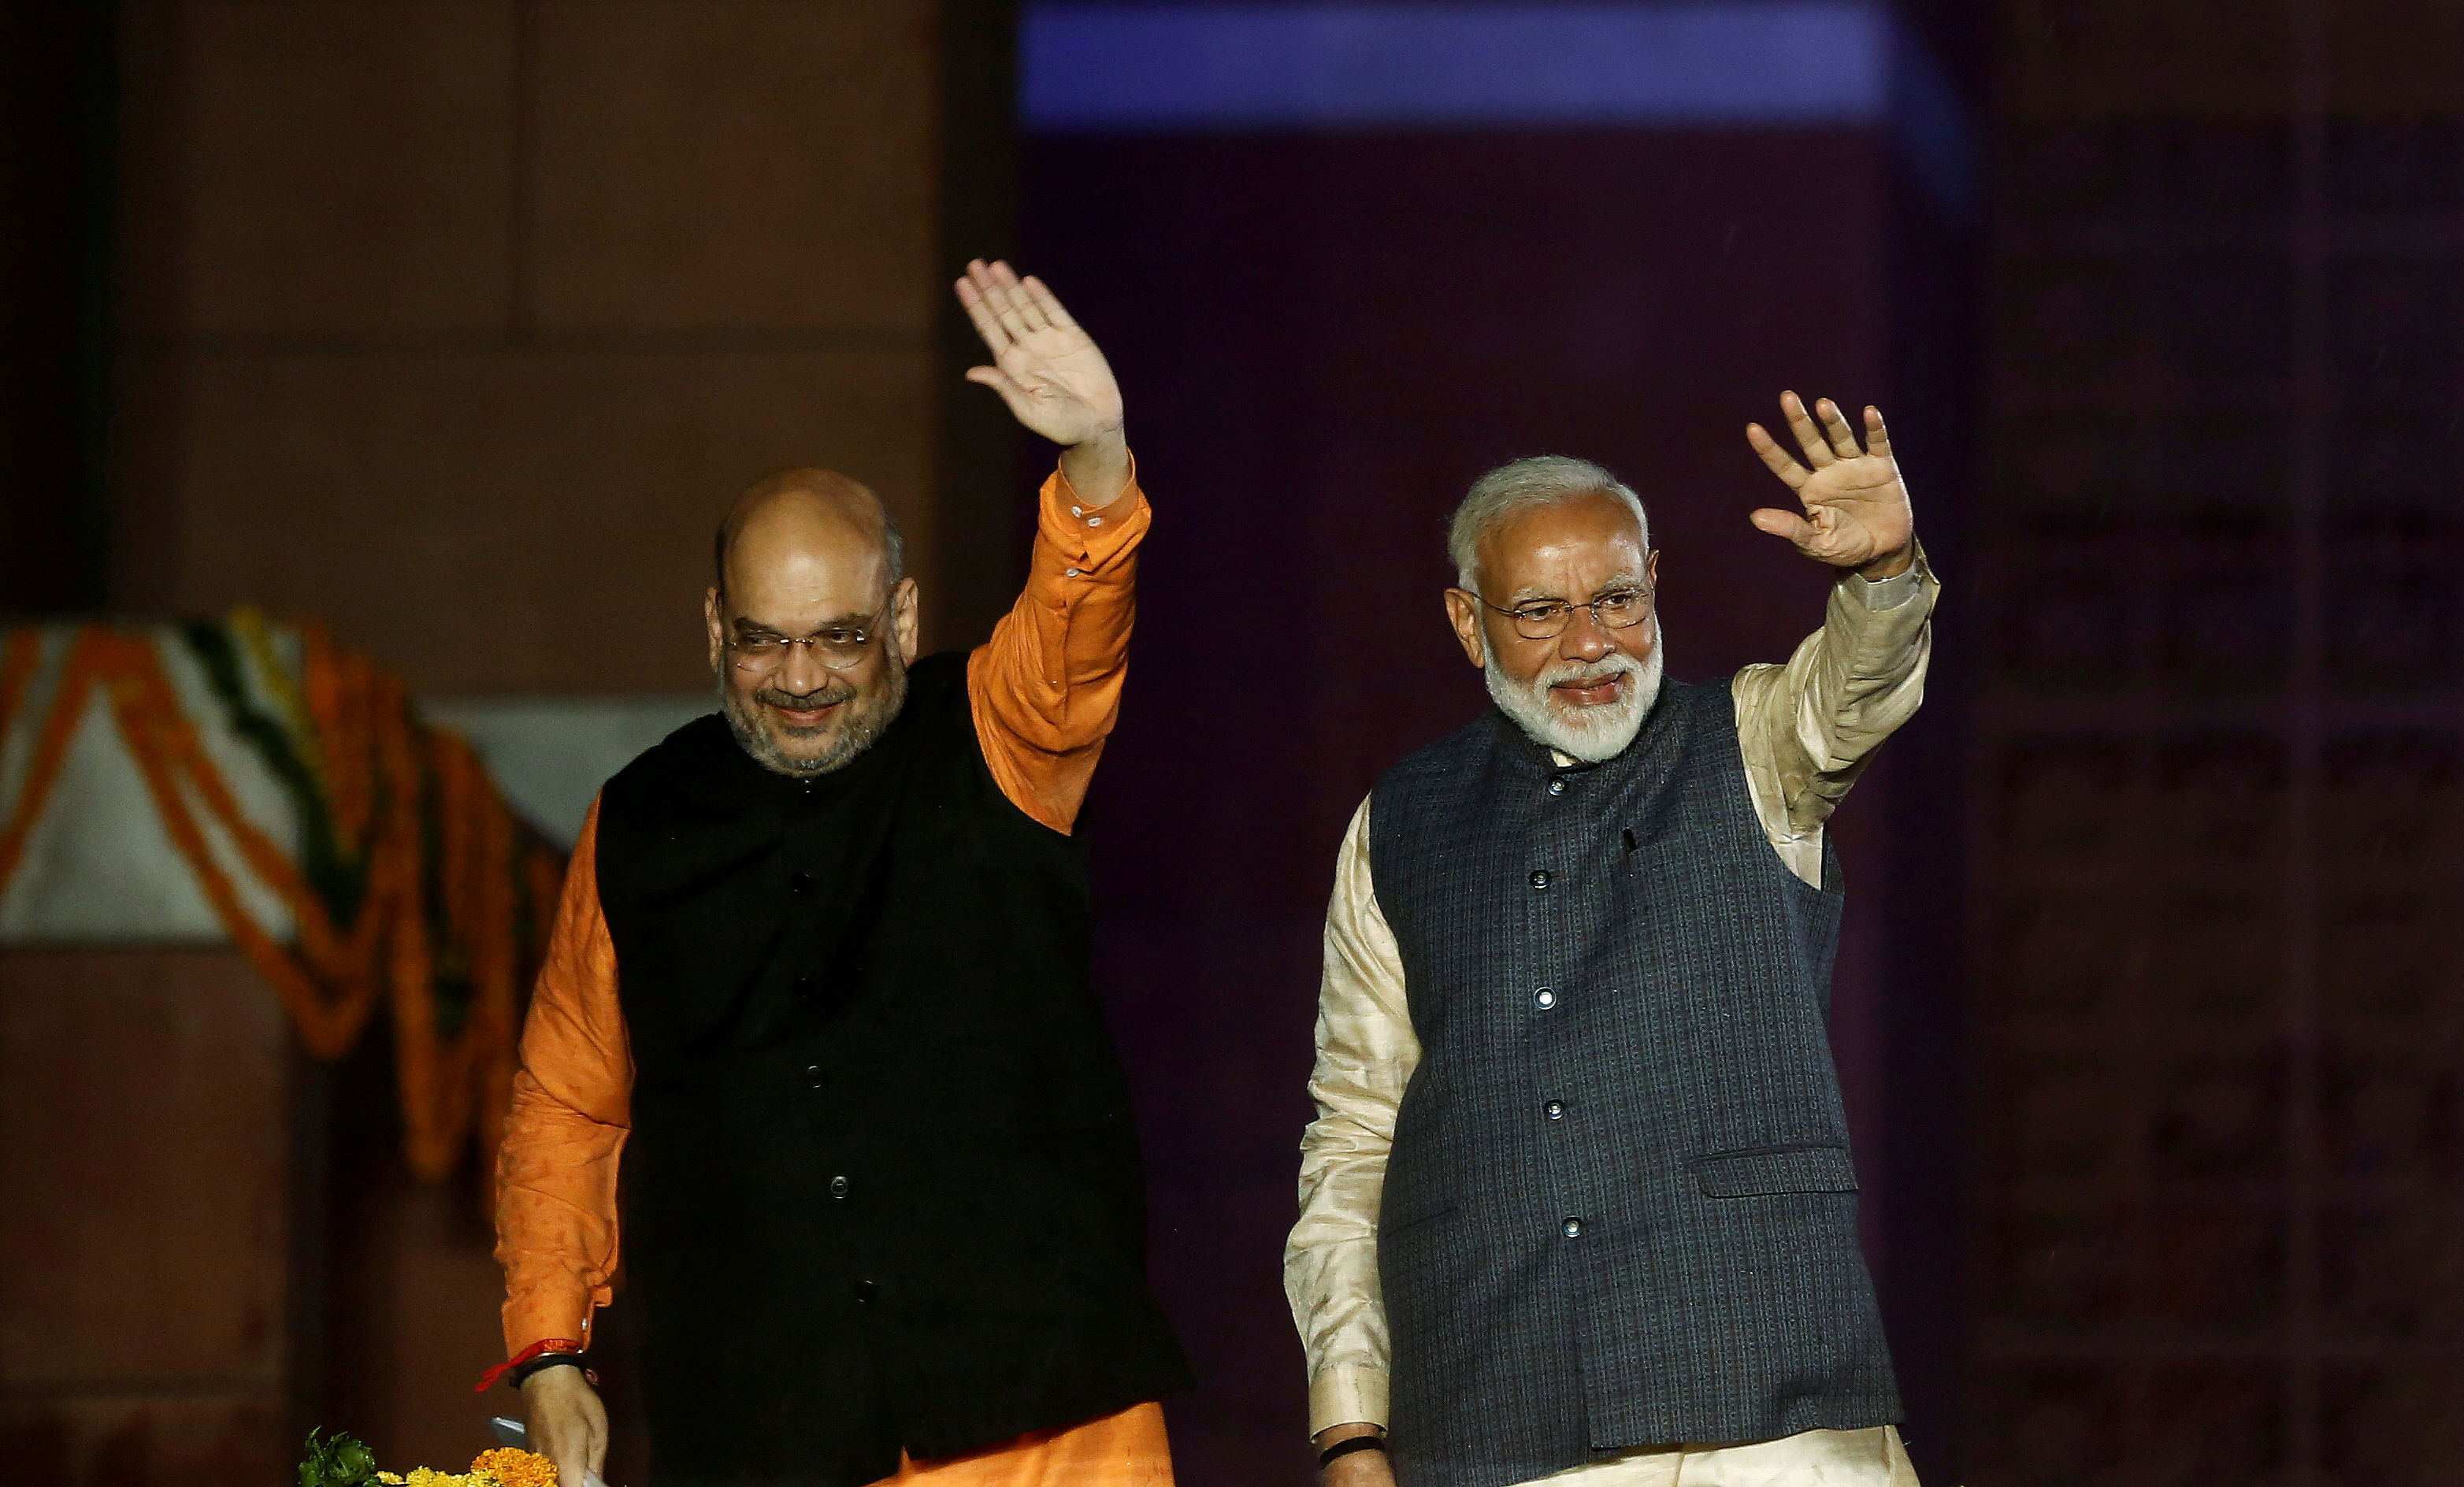 Home Minister Amit Shah (L) and PM Narendra Modi (R) (Credit: Reuters)